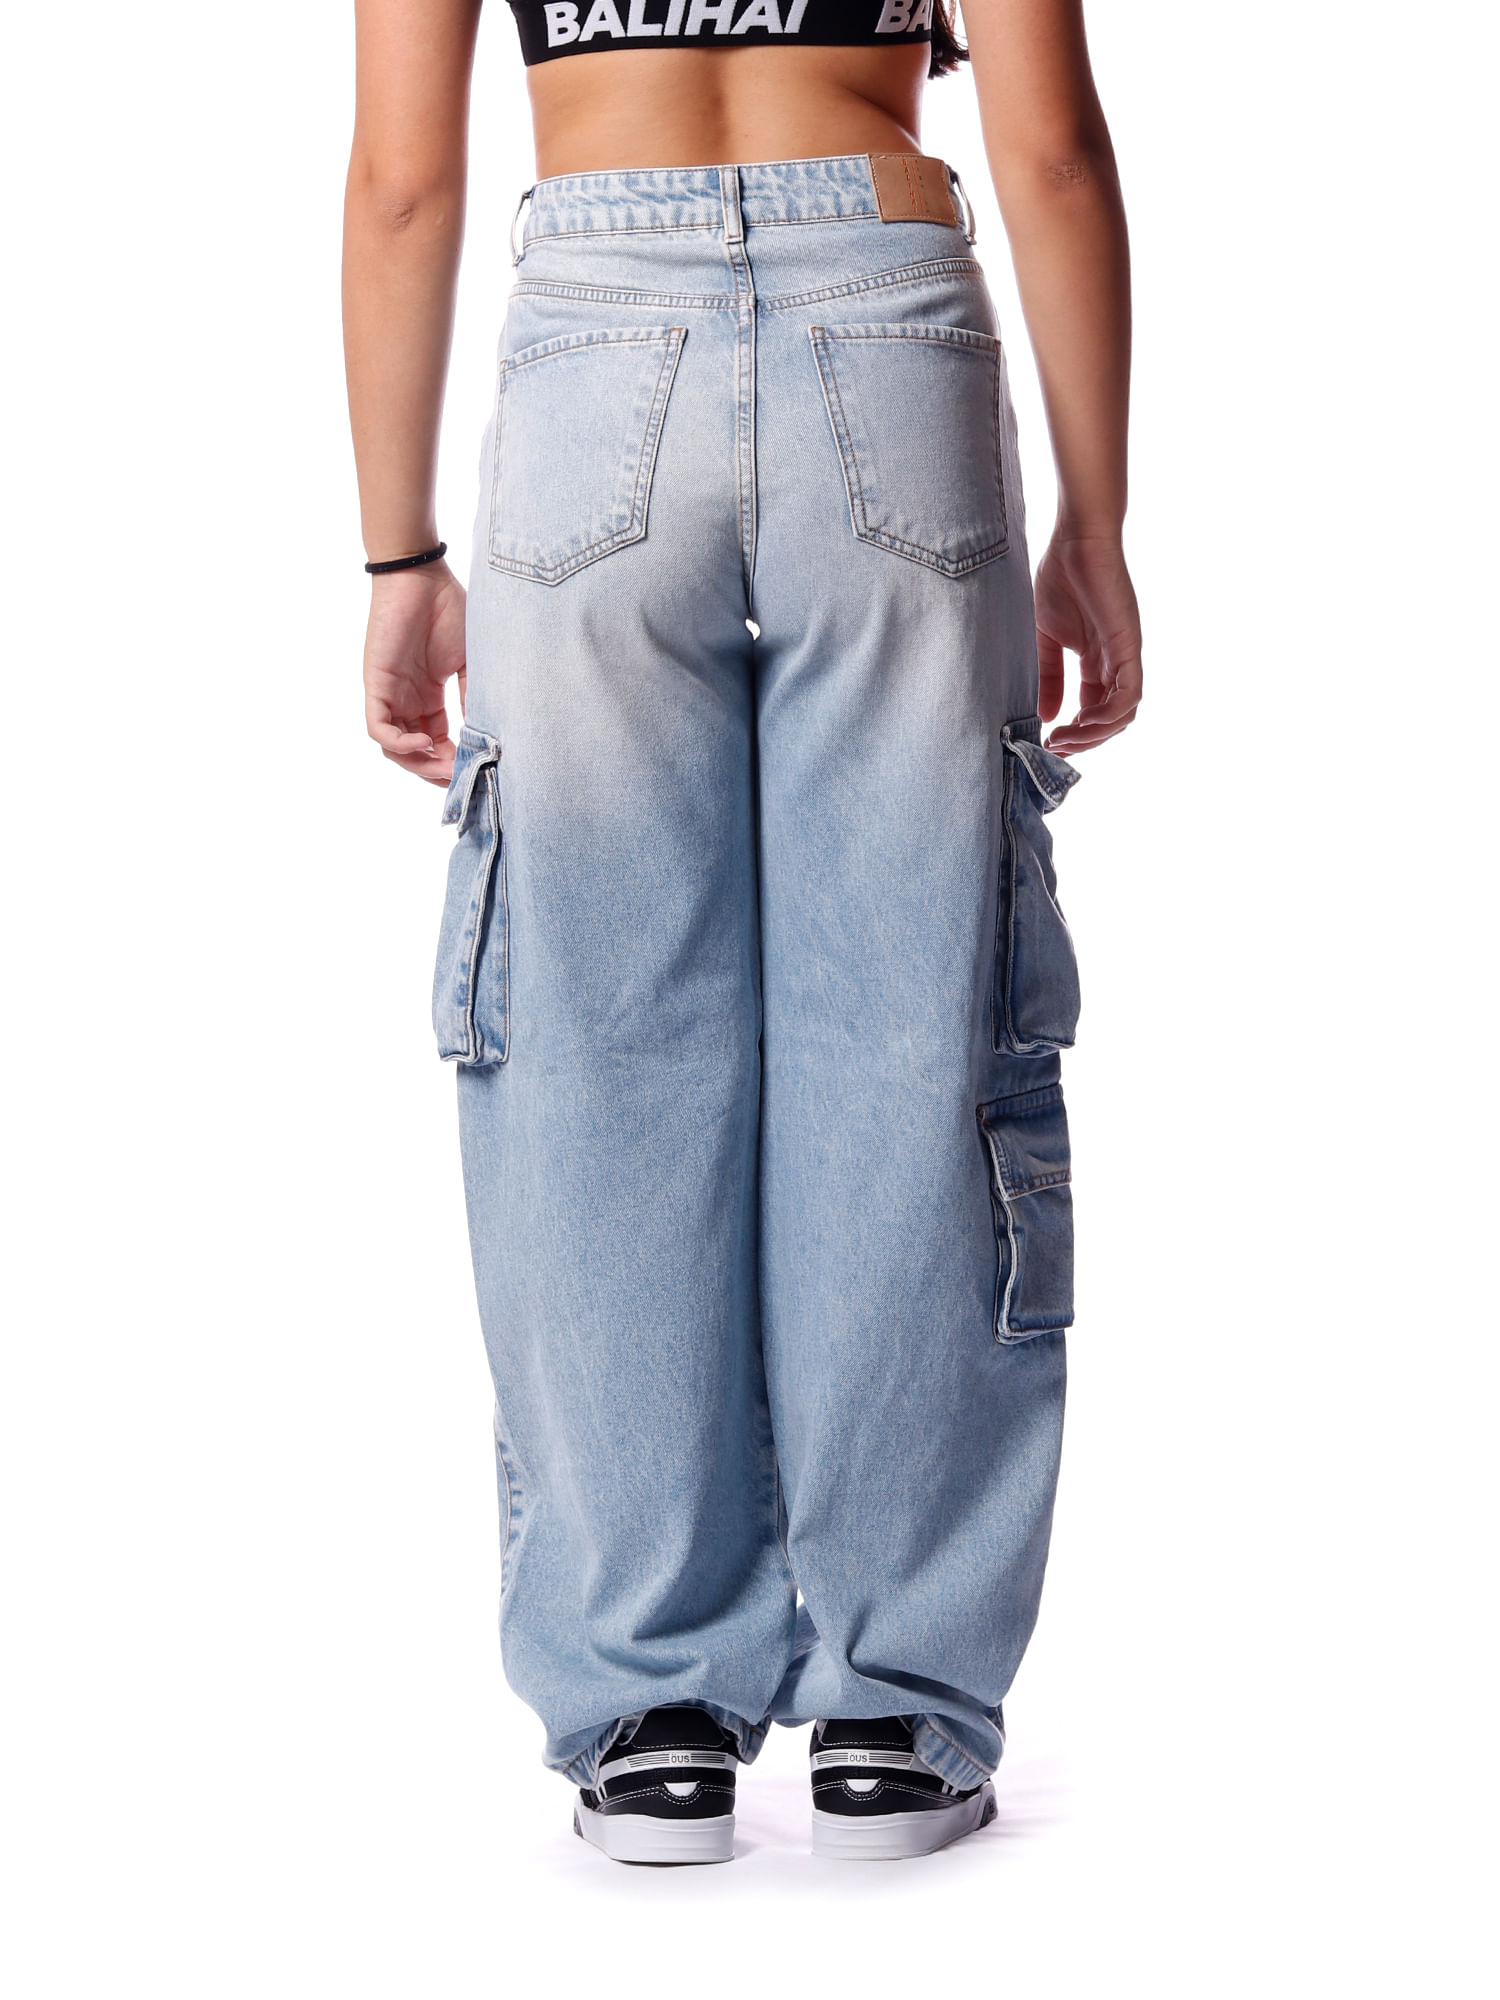 Calca-jeans-bali-hai-straight-cargo-Jeans